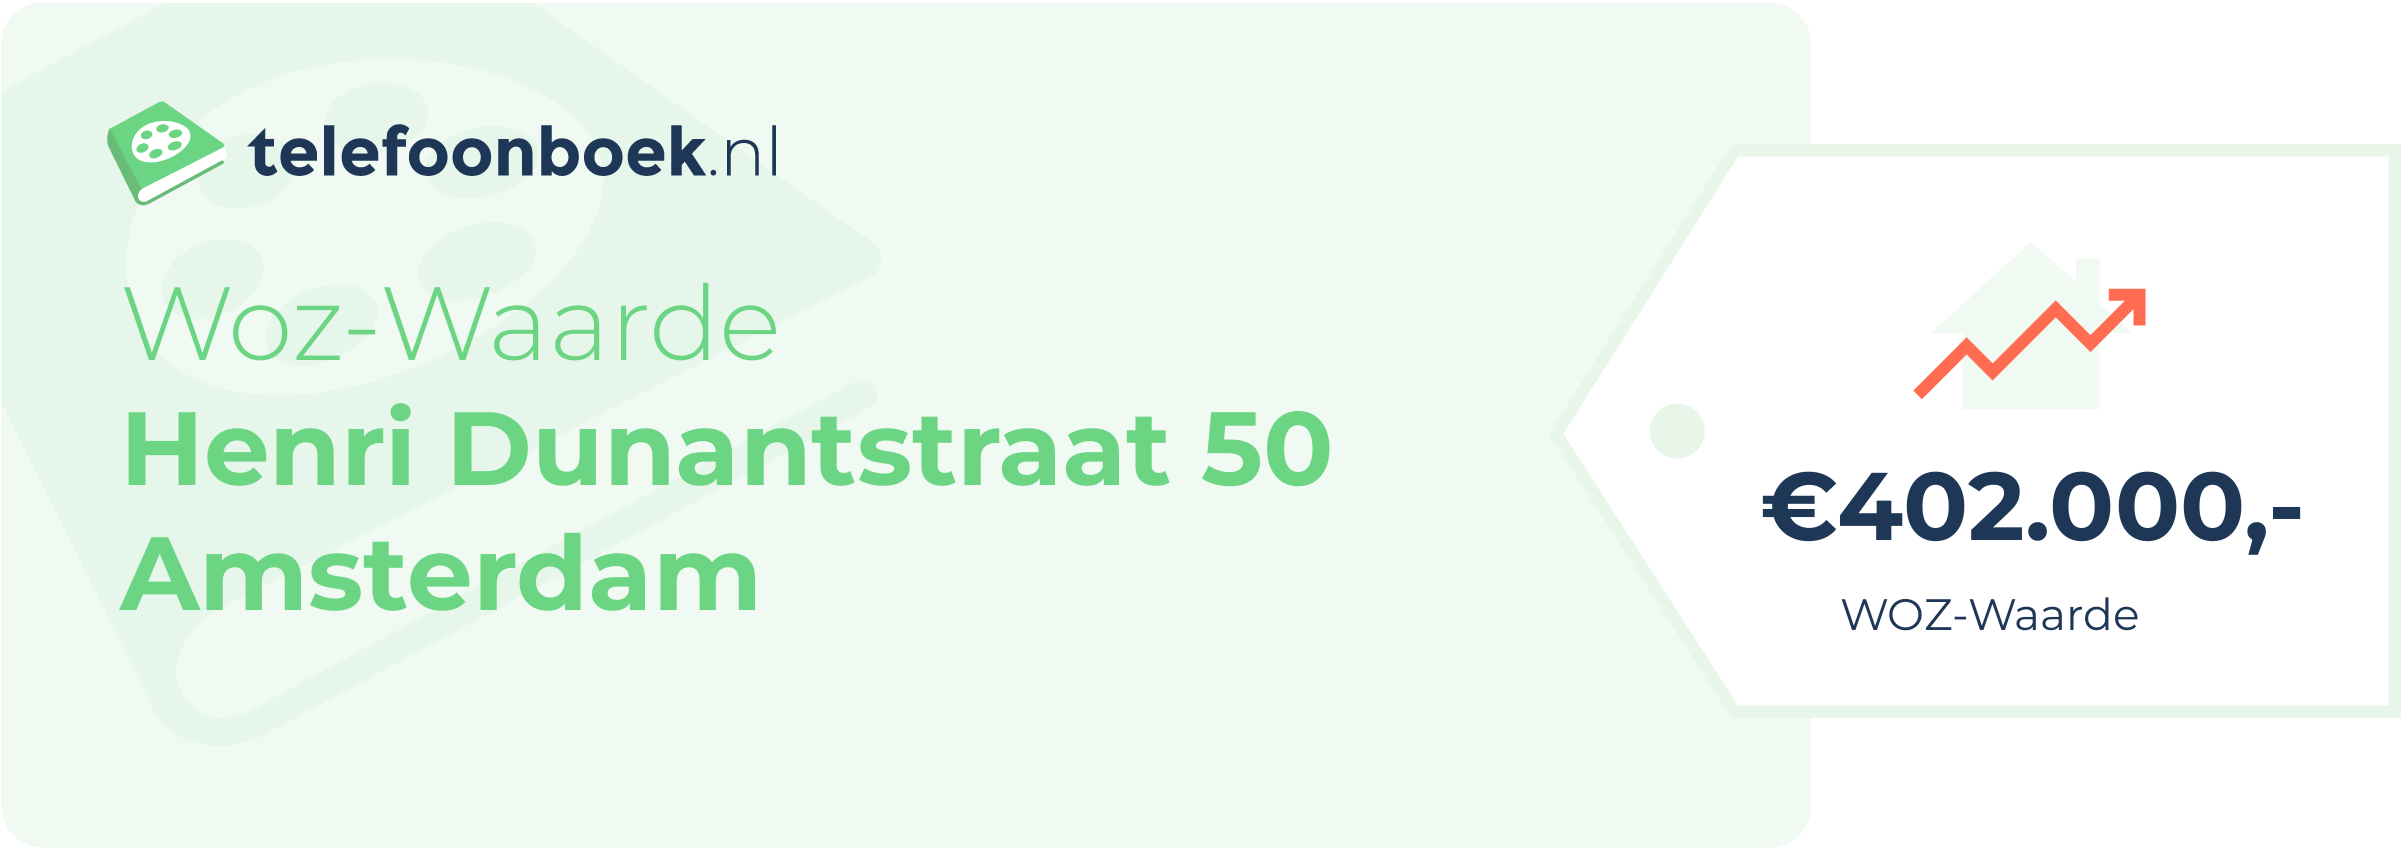 WOZ-waarde Henri Dunantstraat 50 Amsterdam